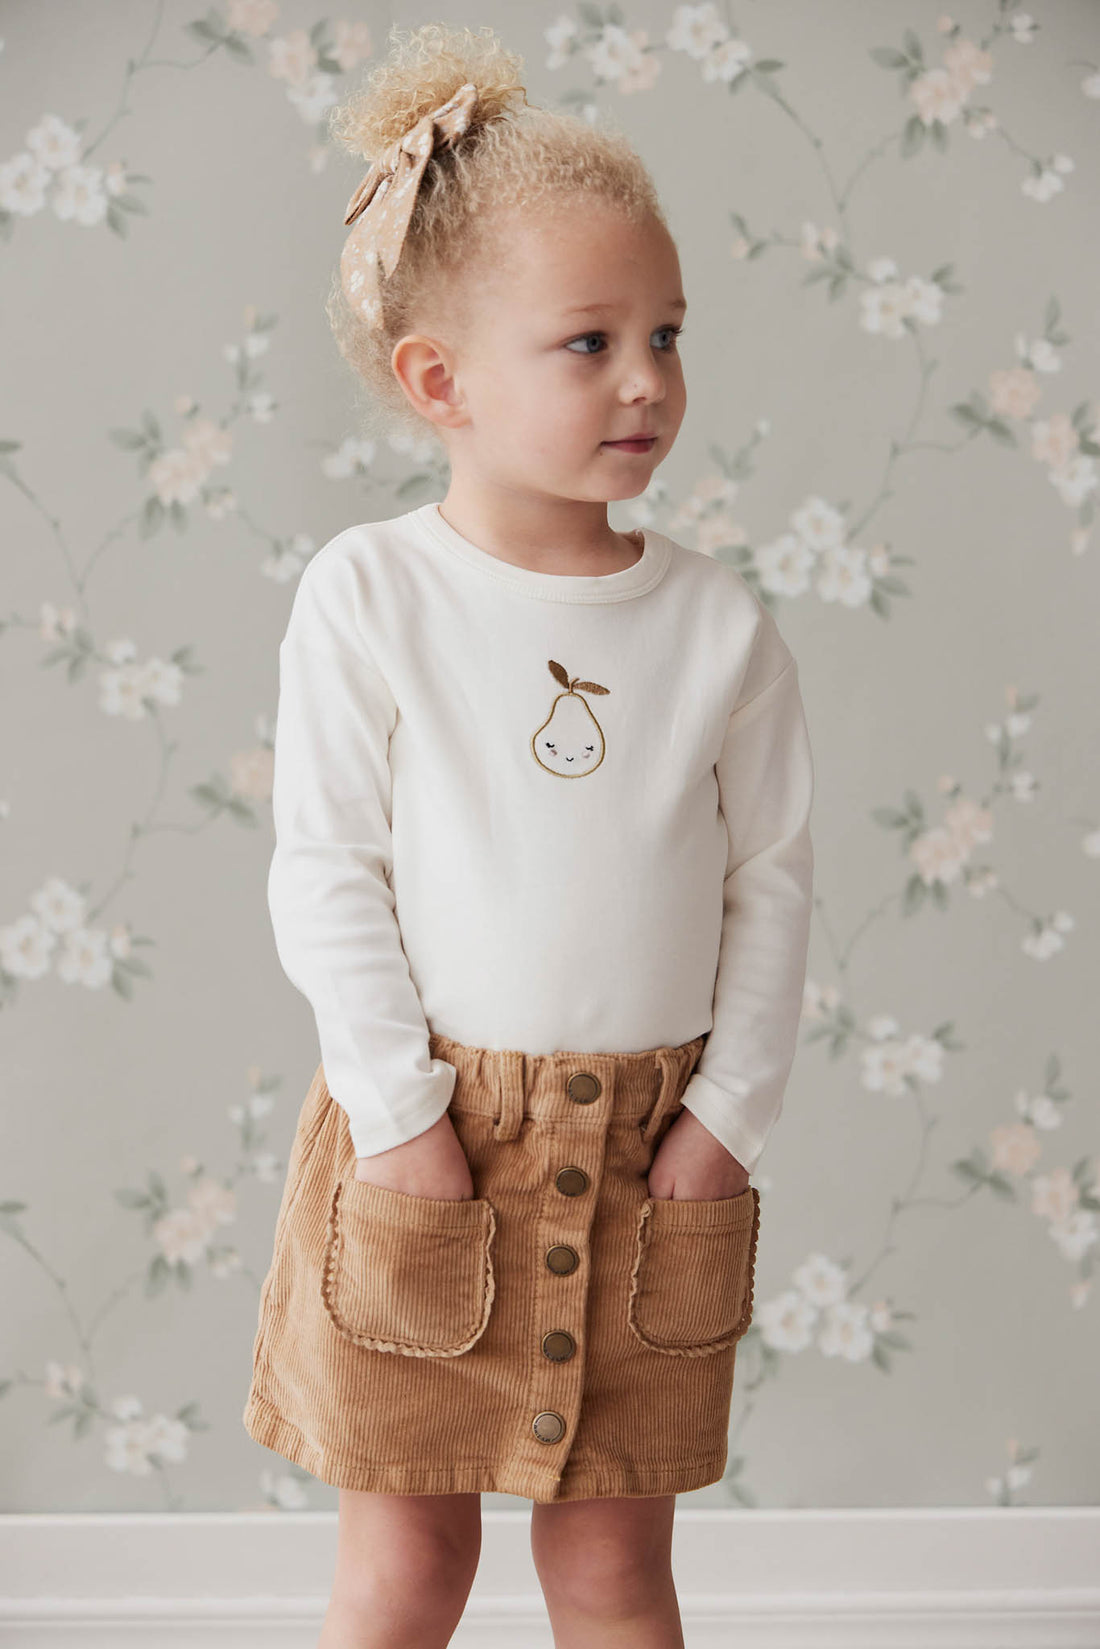 Elodie Cord Skirt - Caramel Cream Childrens Skirt from Jamie Kay NZ